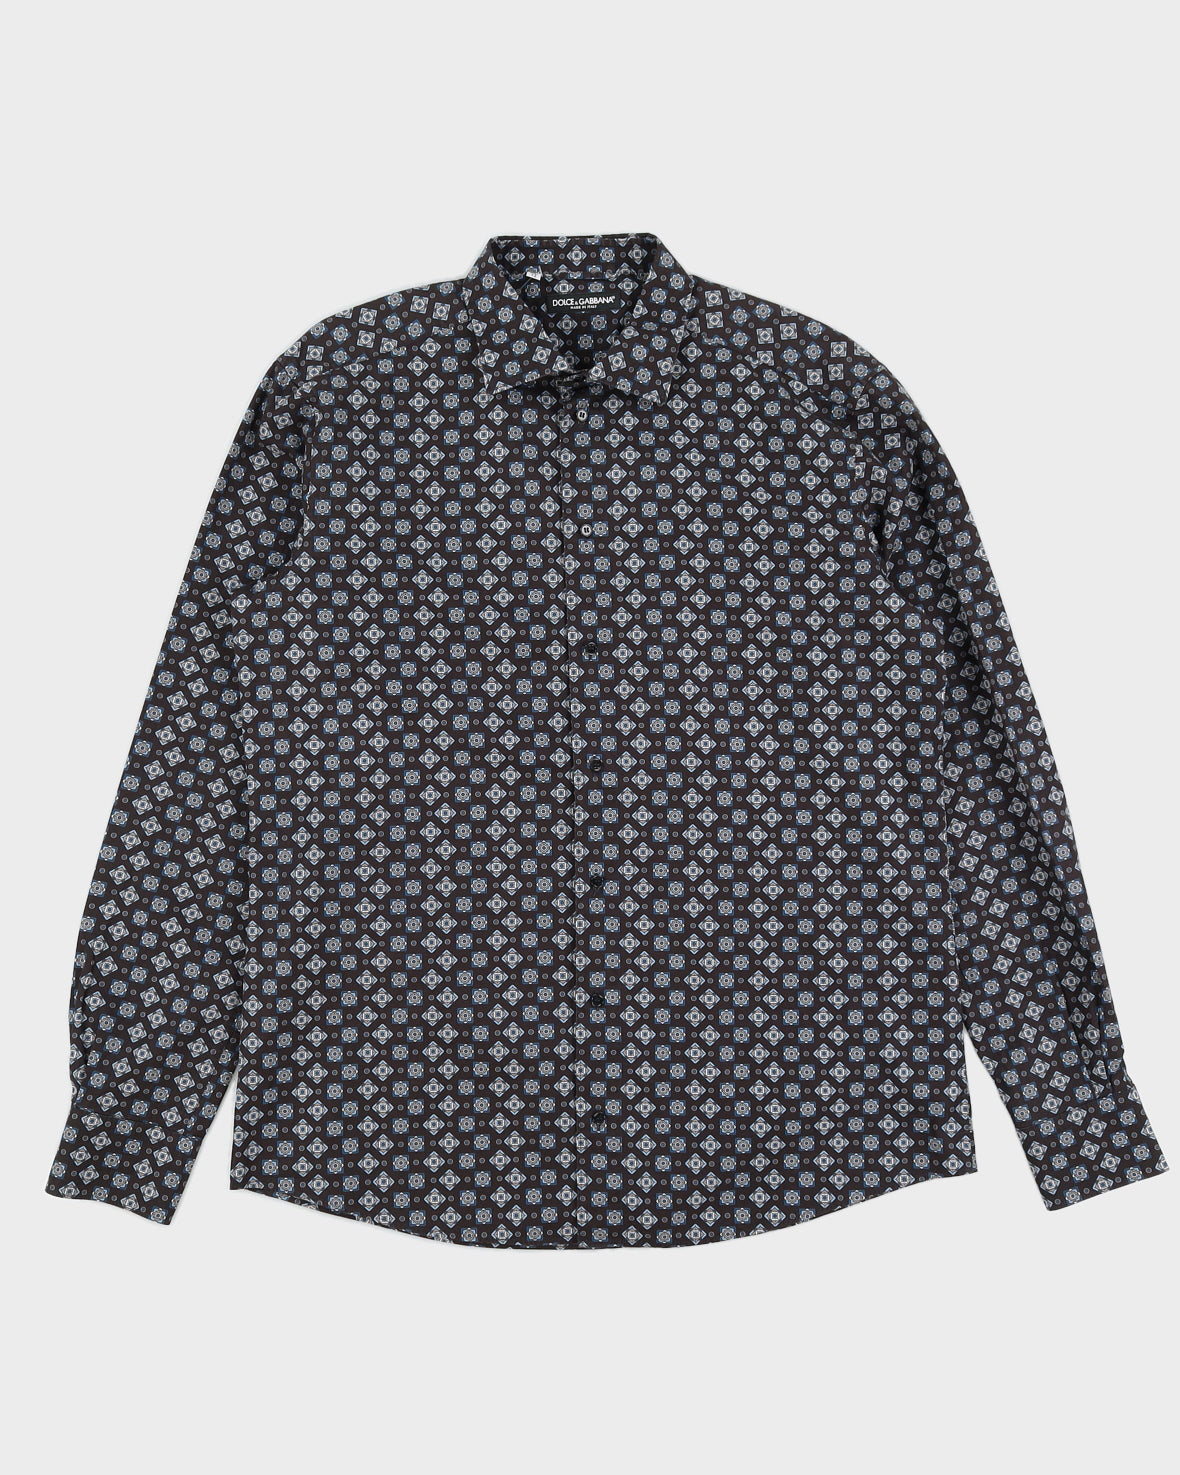 Dolce & Gabbana Printed Long Sleeve Shirt - L